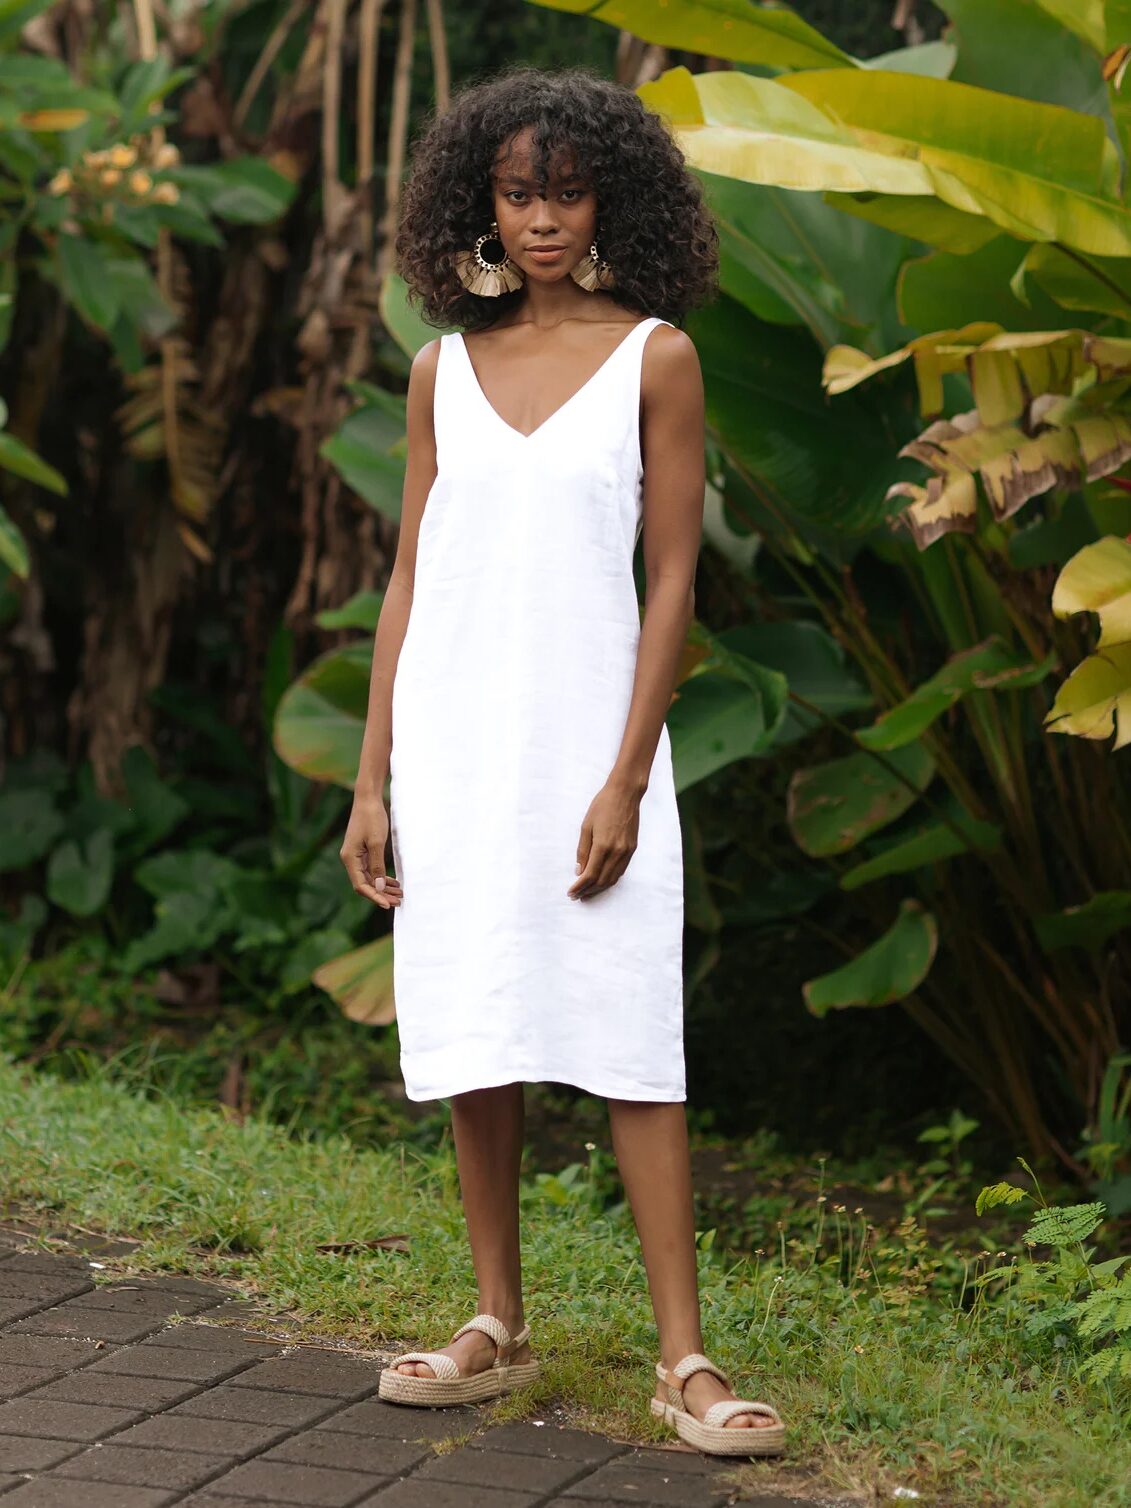 9 Best Affordable Linen Clothing Brands For Breezy Basics - The